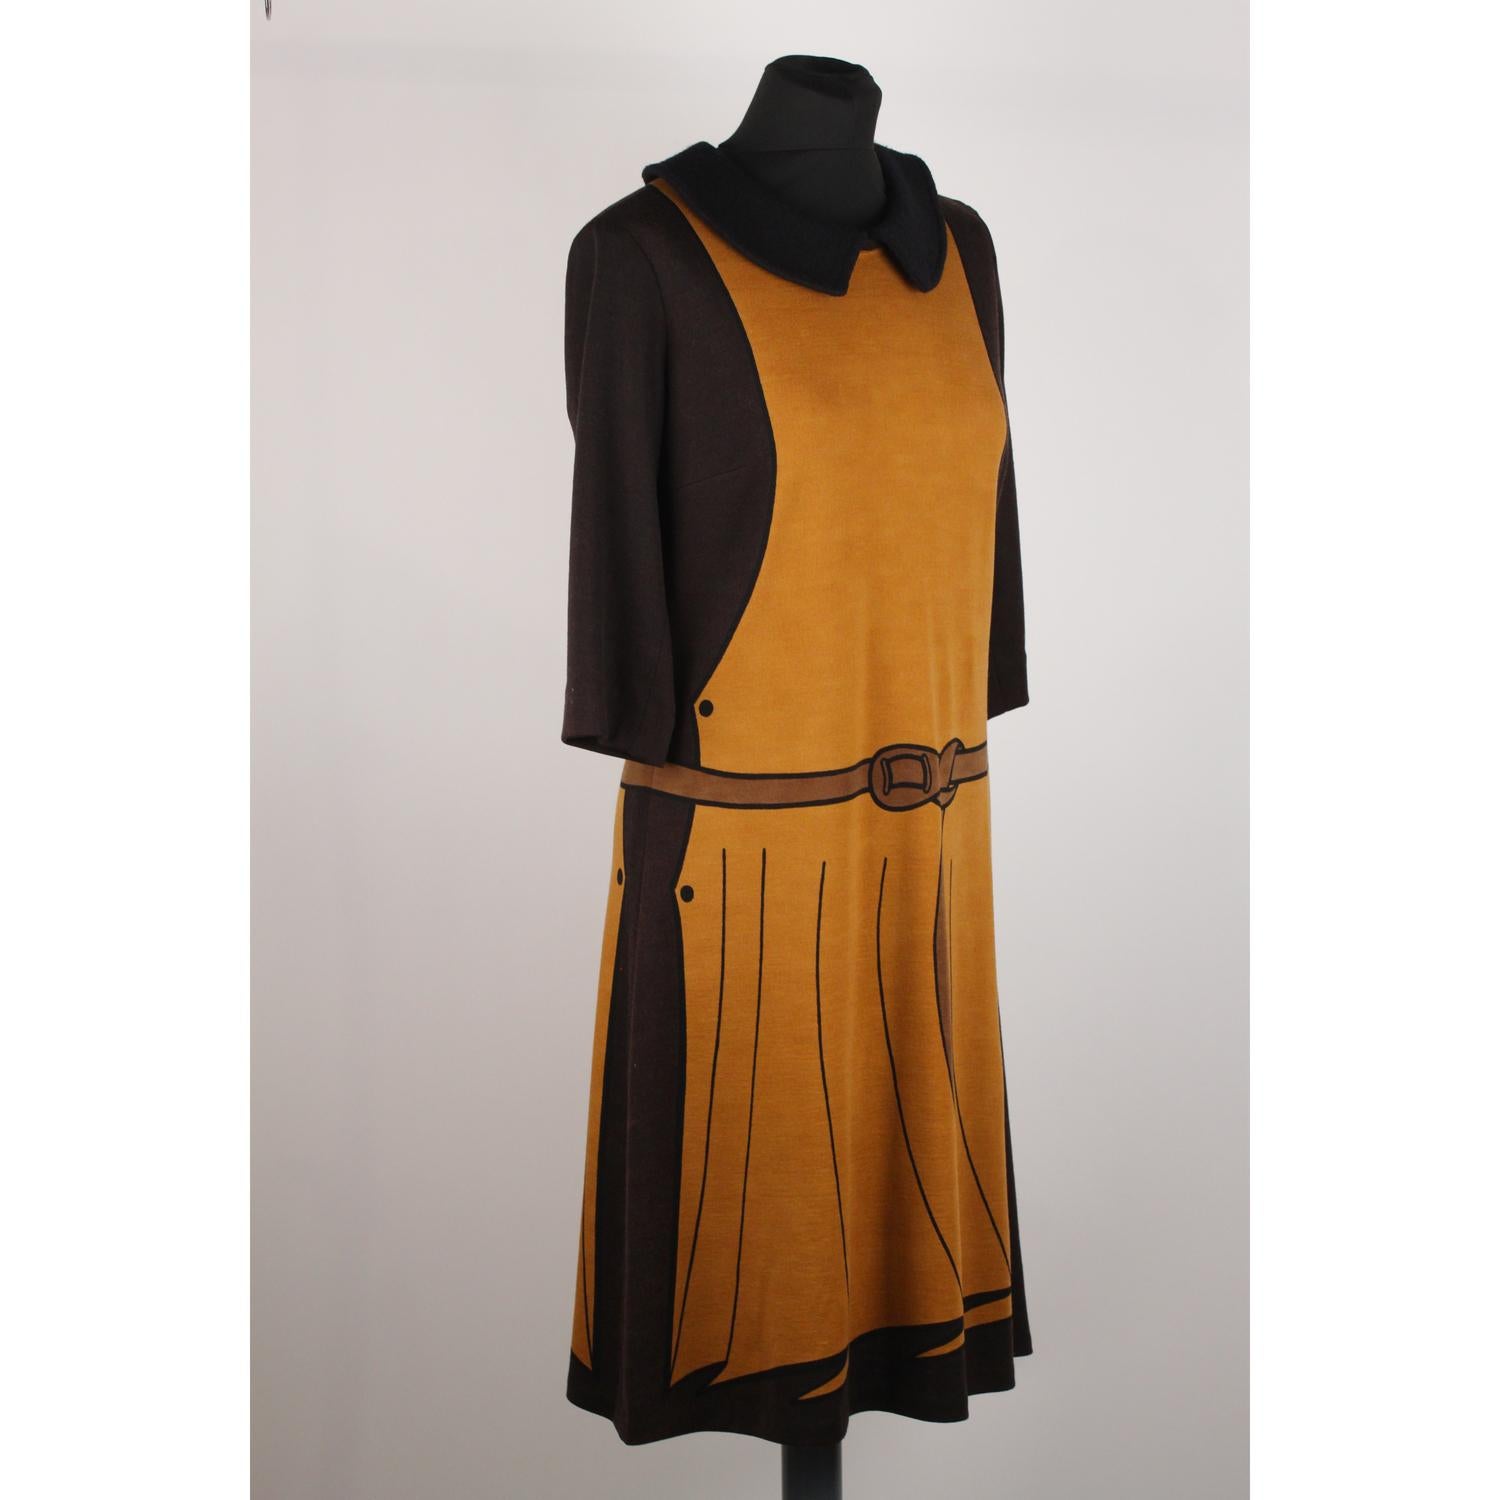 Women's Roberta Di Camerino Vintage Trompe l'Oeil 3/4 Sleeve Dress Size 48